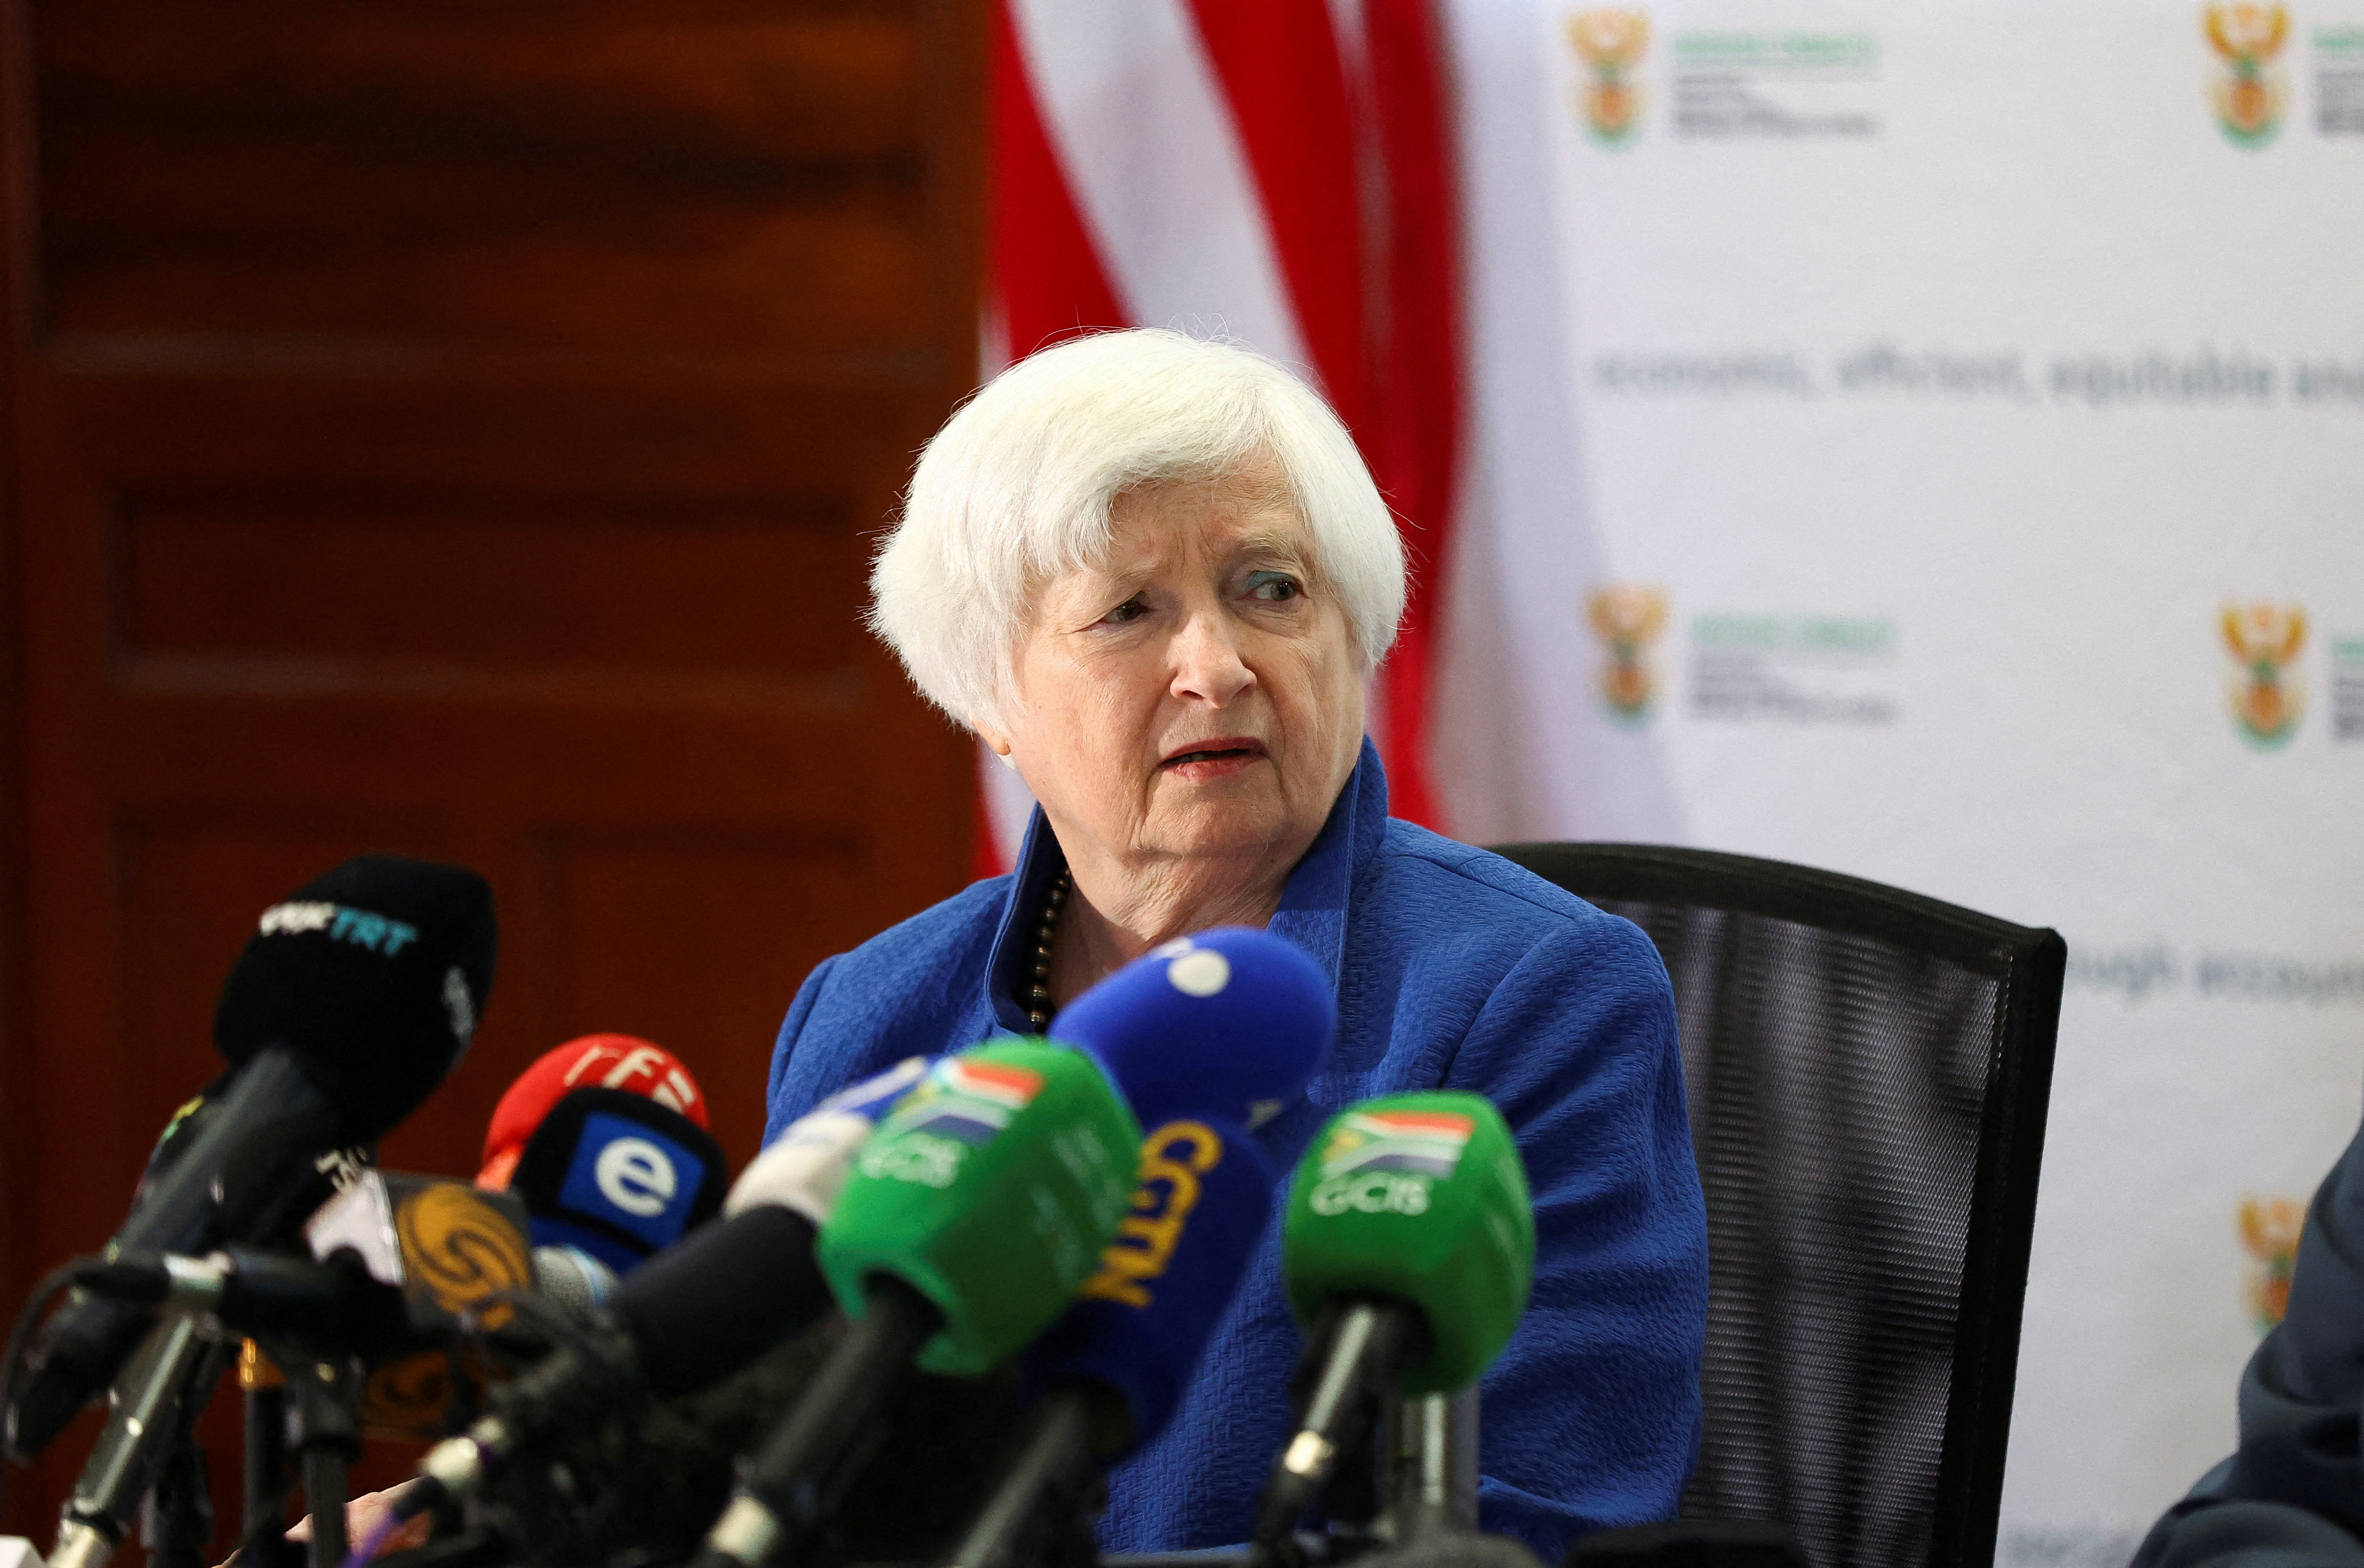 U.S. Treasury Secretary Janet Yellen visits South Africa